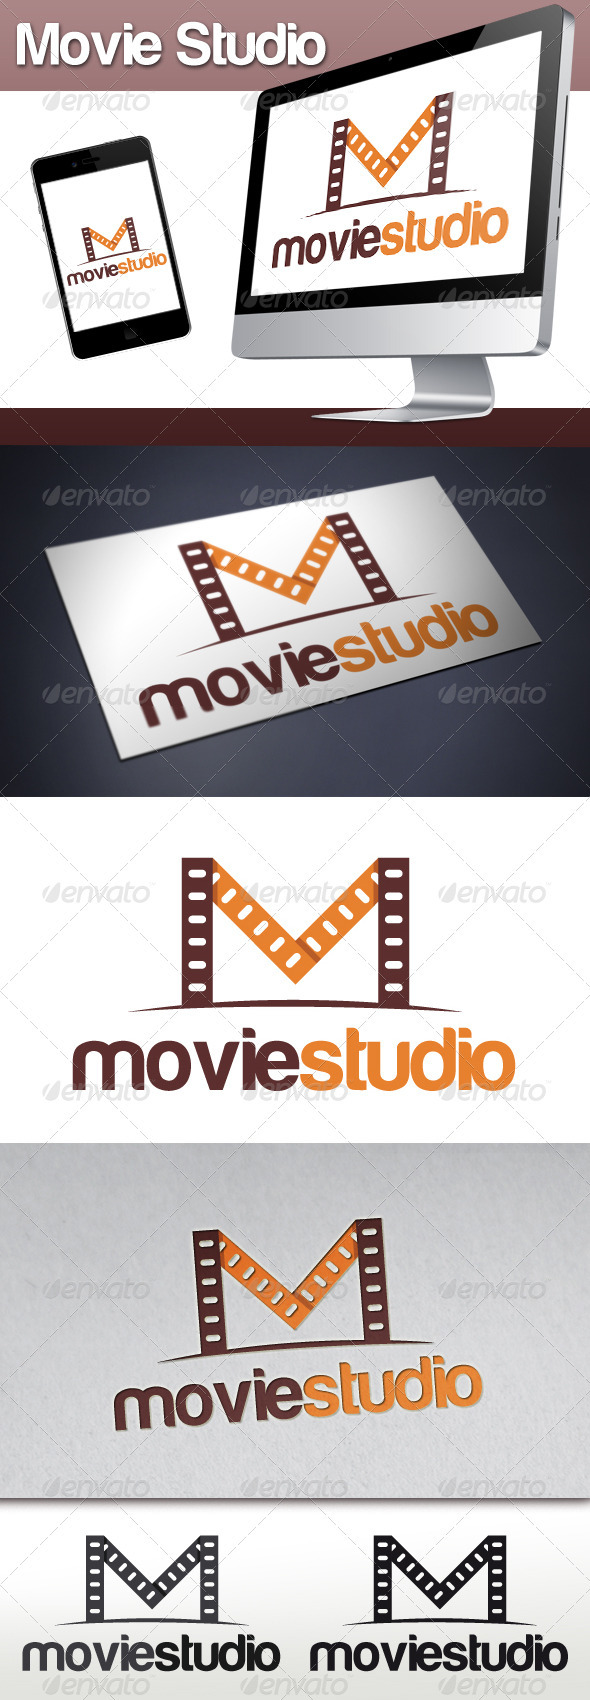 Movie Lab Logo